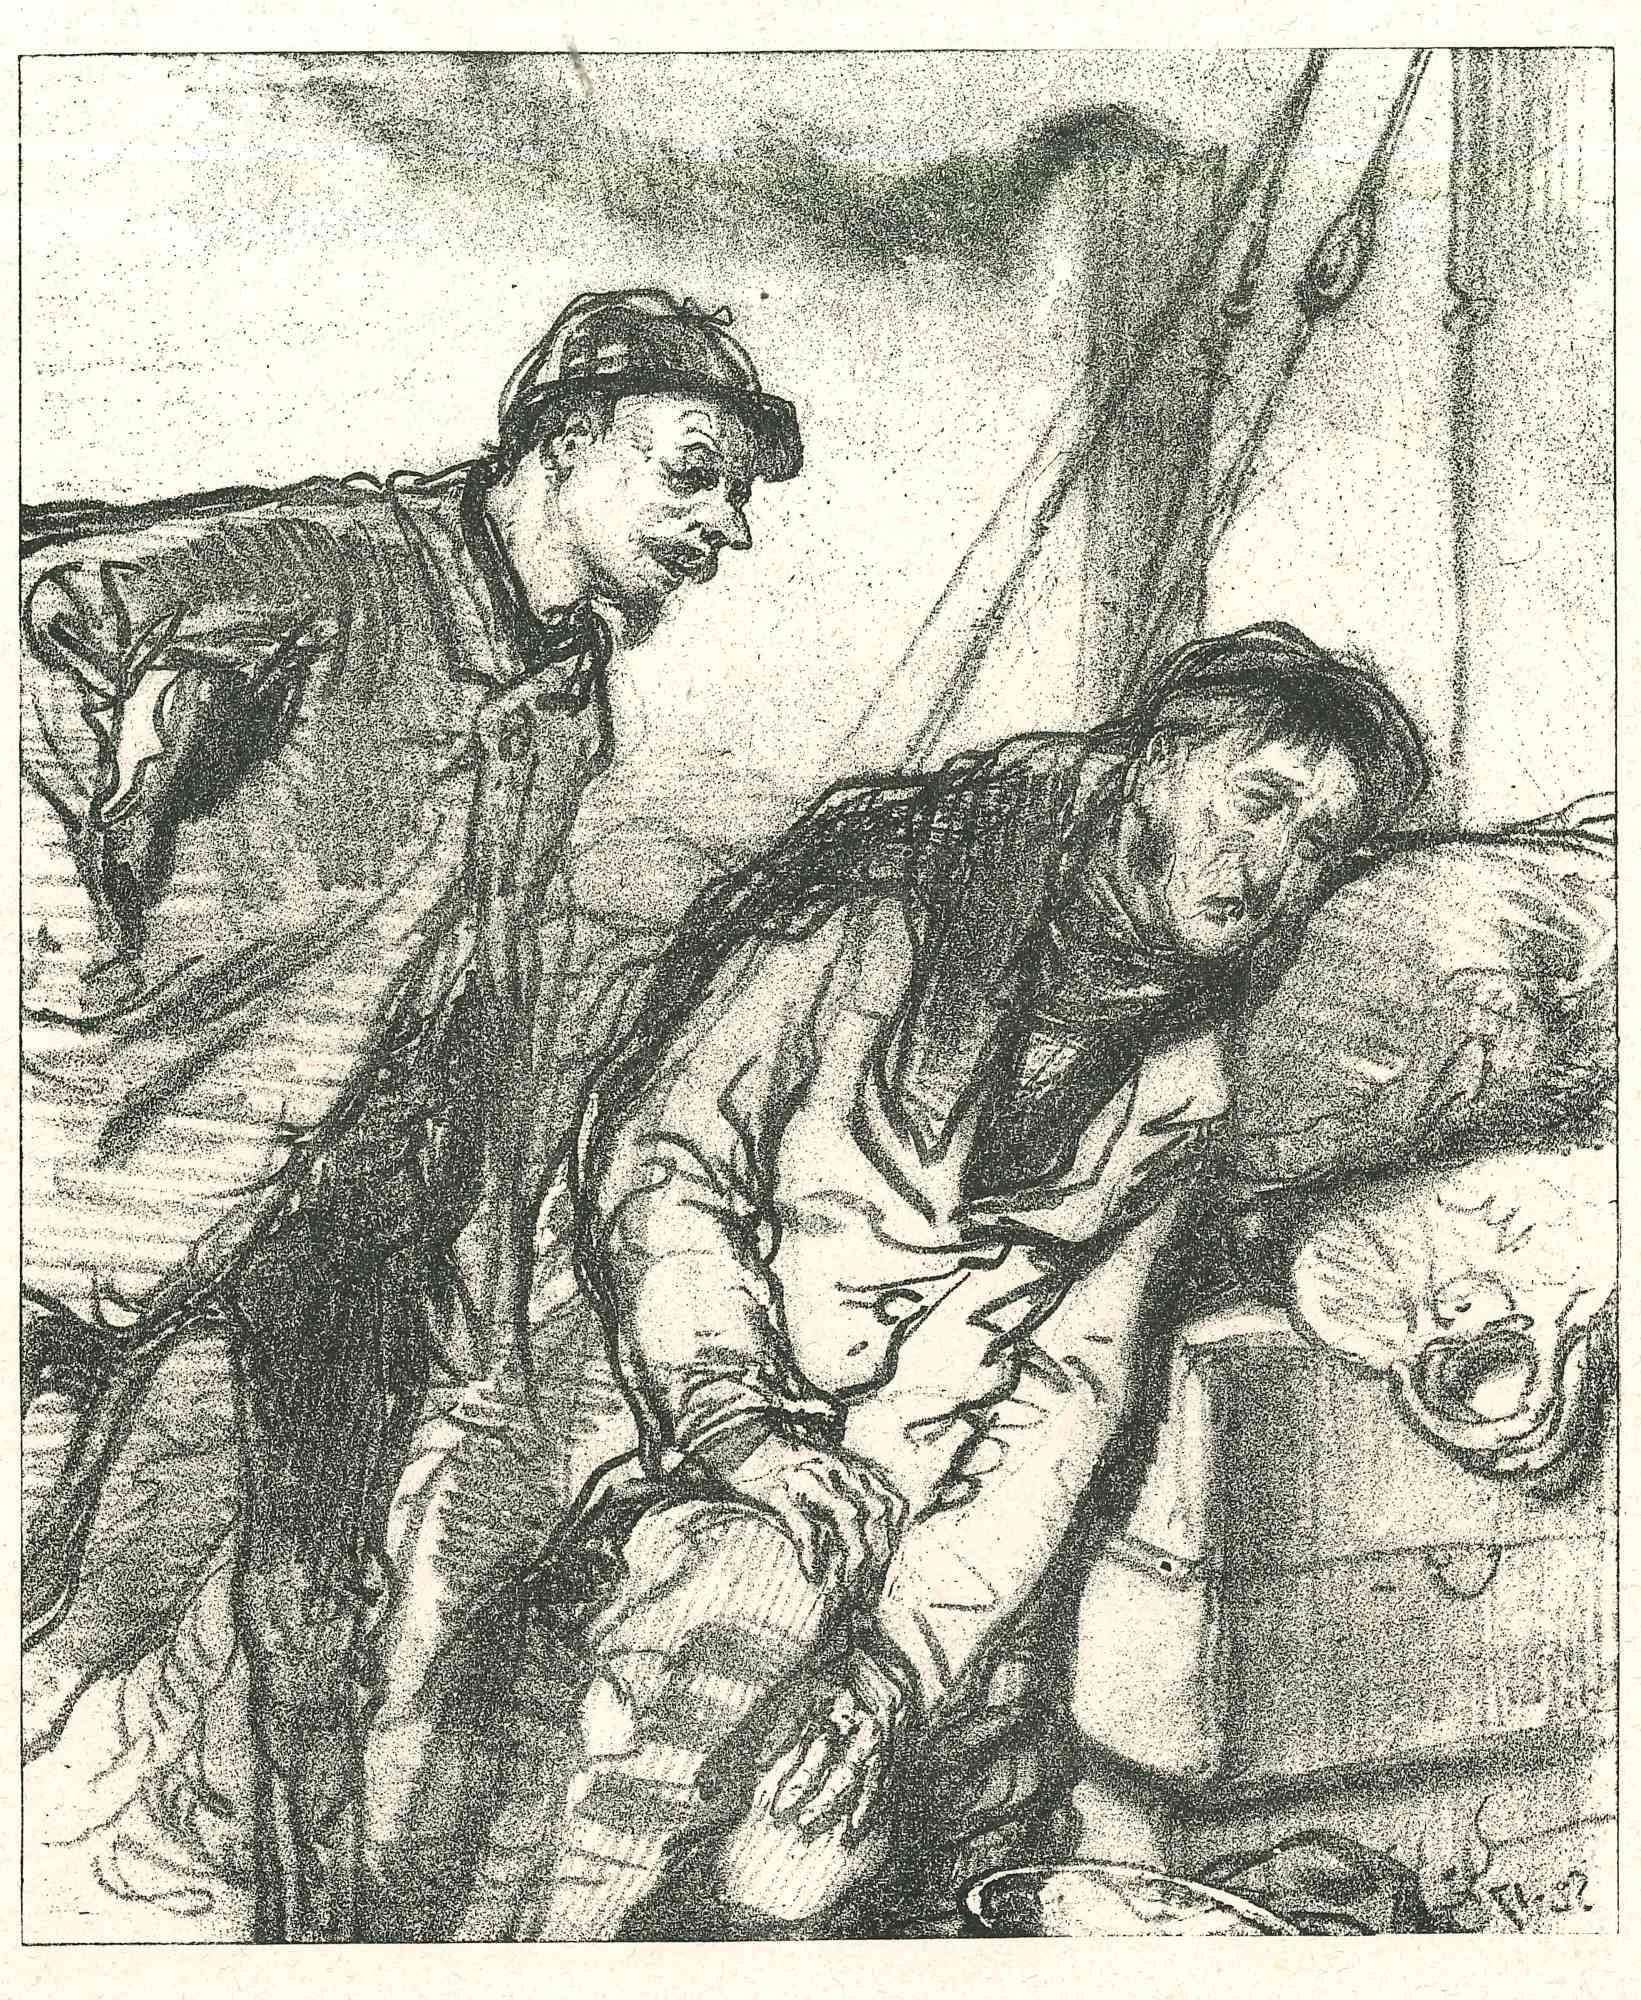 The Misery - Original Lithograph after Paul Gavarni - 1881